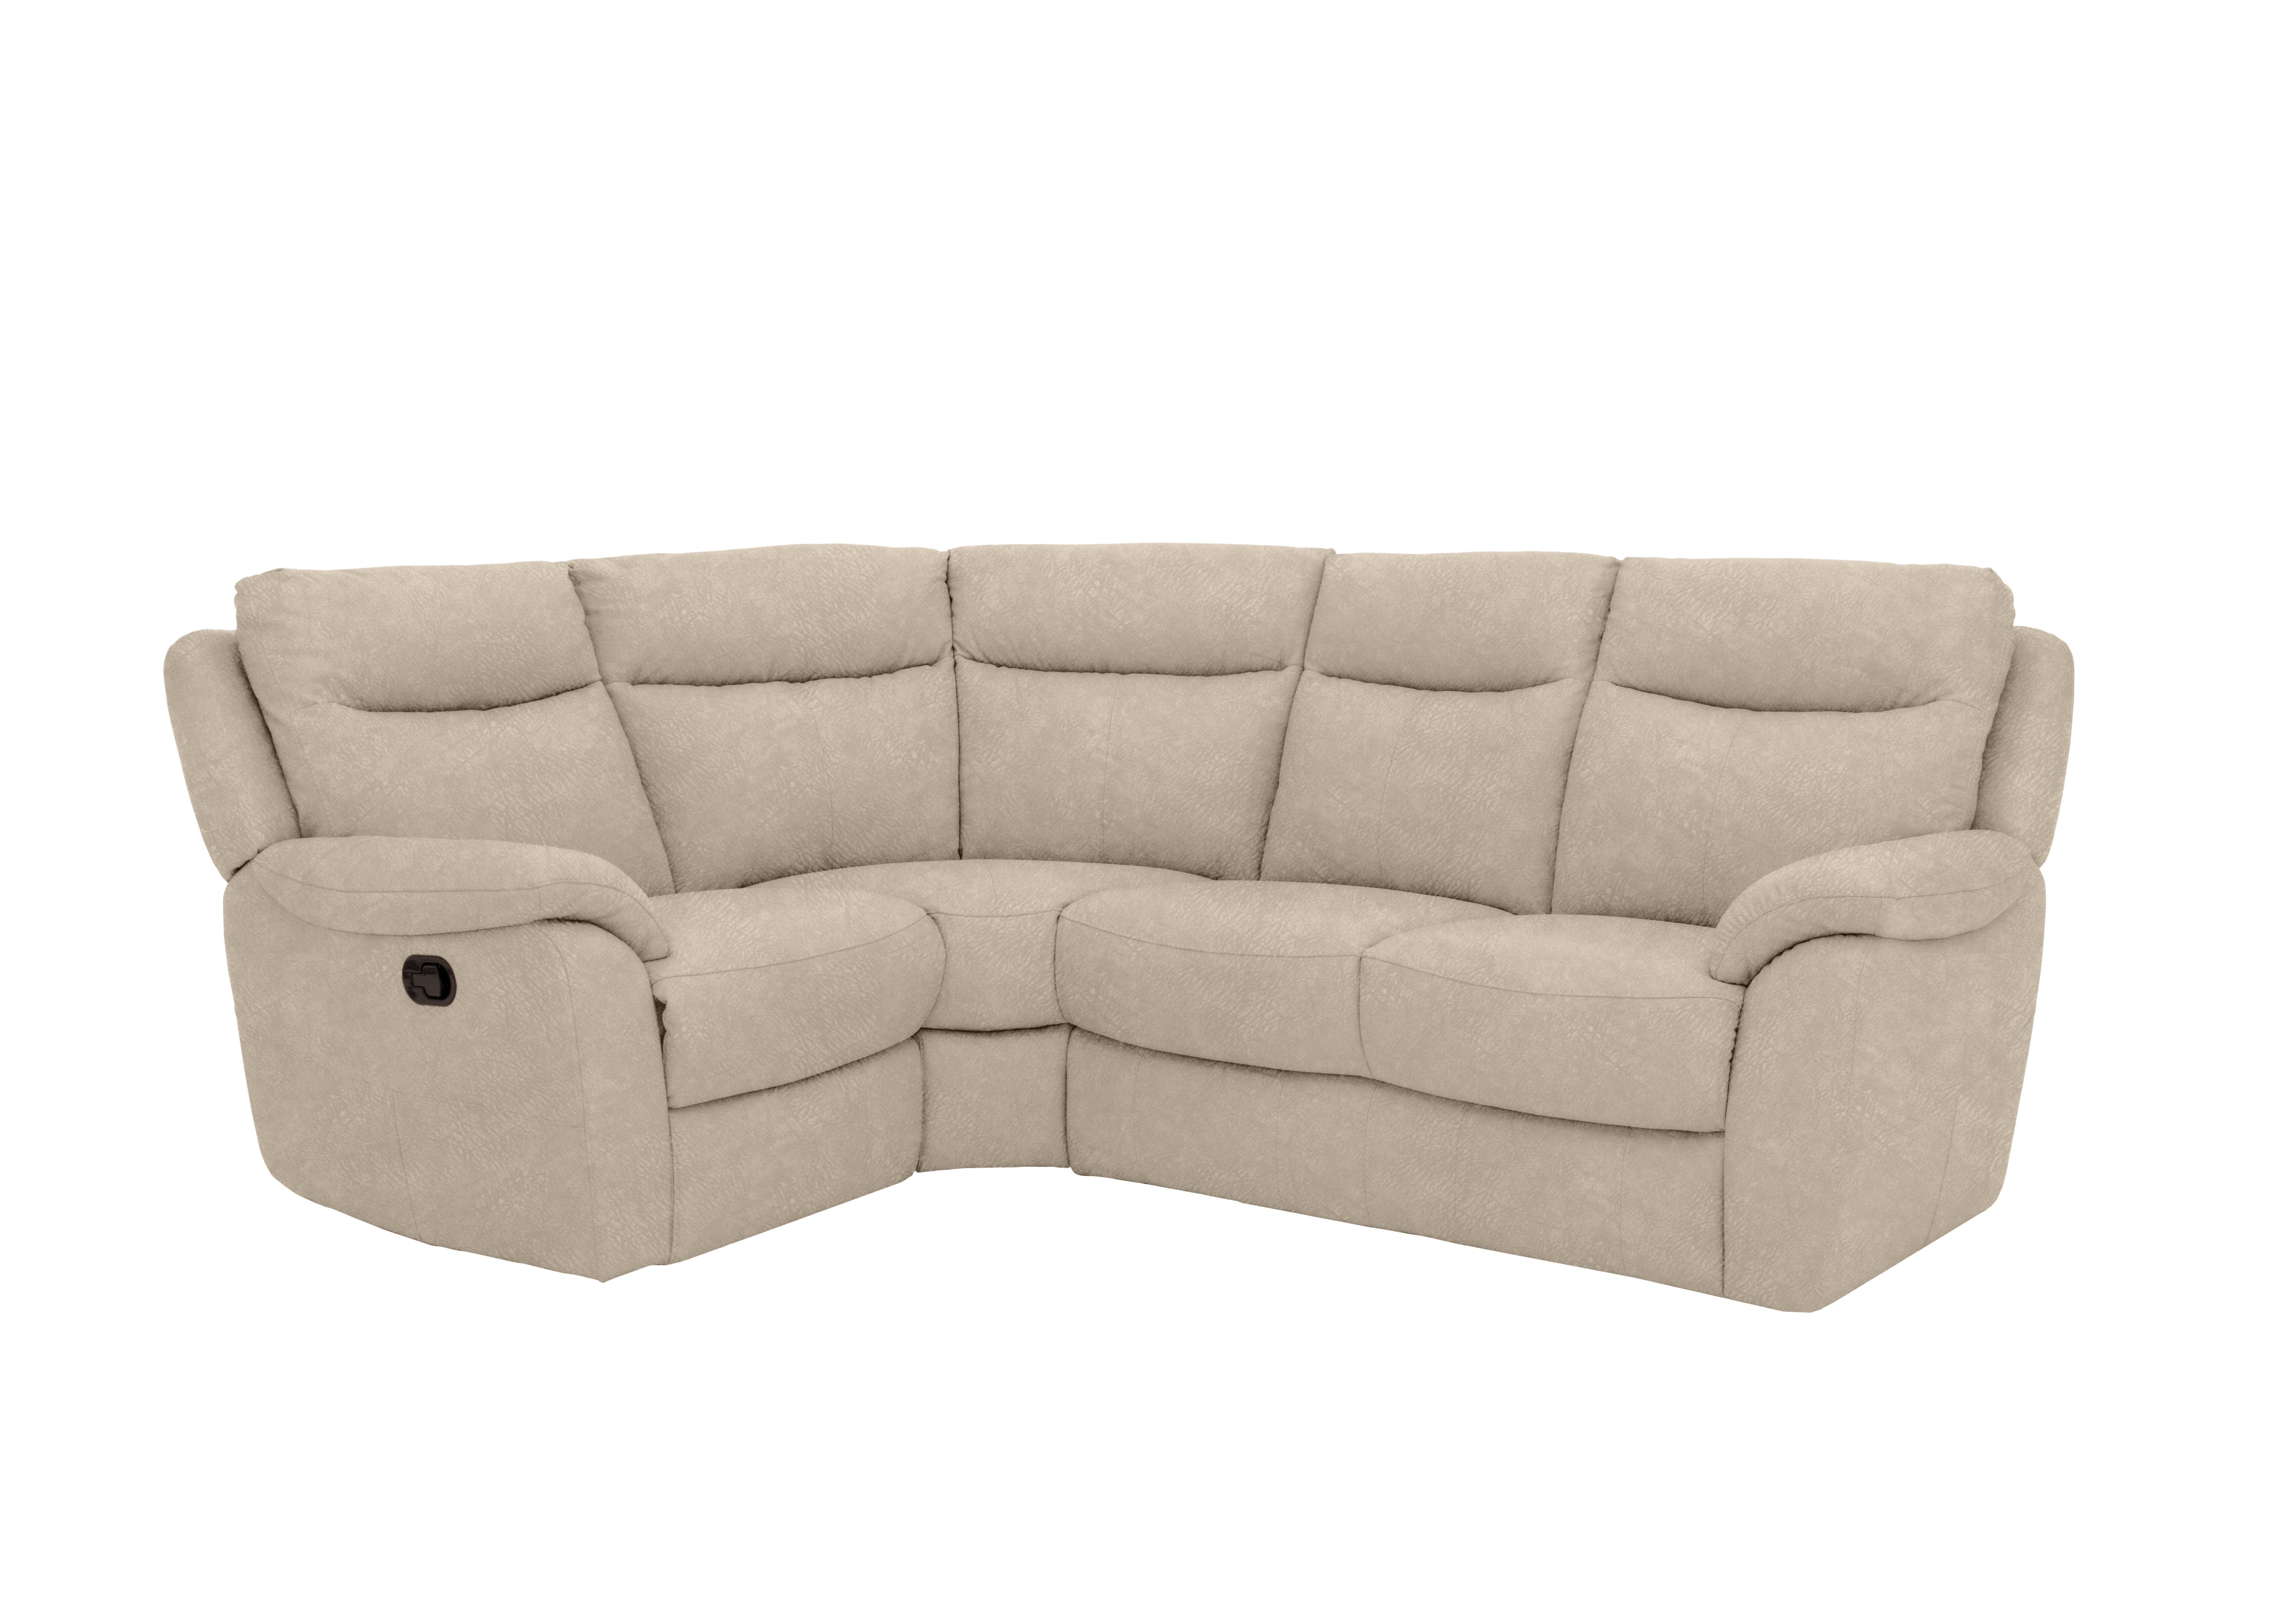 Snug Compact Fabric Corner Sofa in Bfa-Bnn-R26 Fv2 Cream on Furniture Village